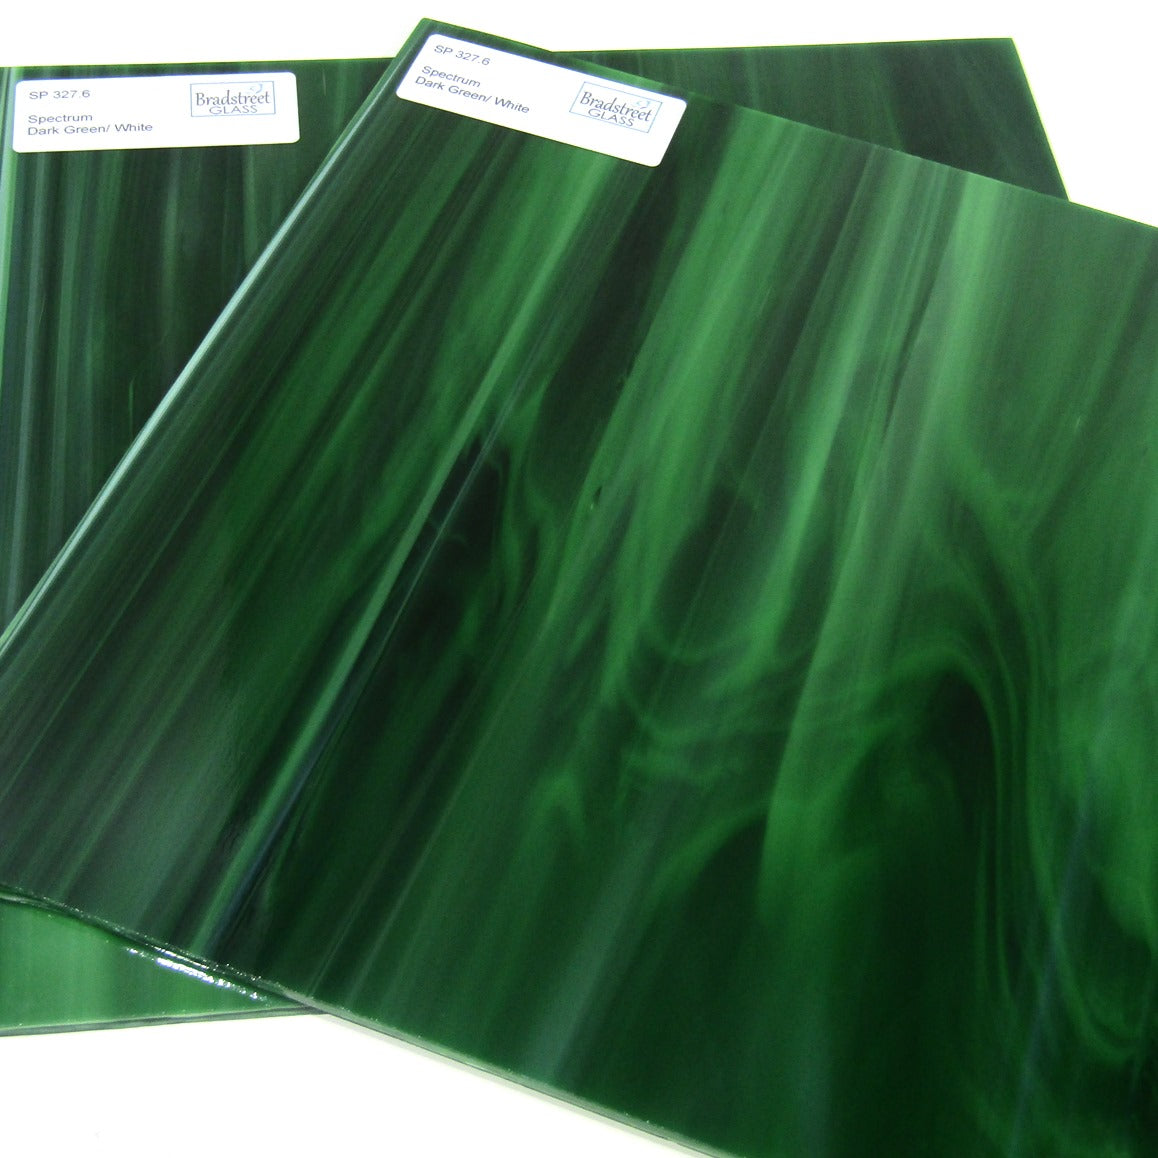 Spectrum 327.6 Stained Glass Sheet Dark Green White Opal Streaky Swirled Opaque